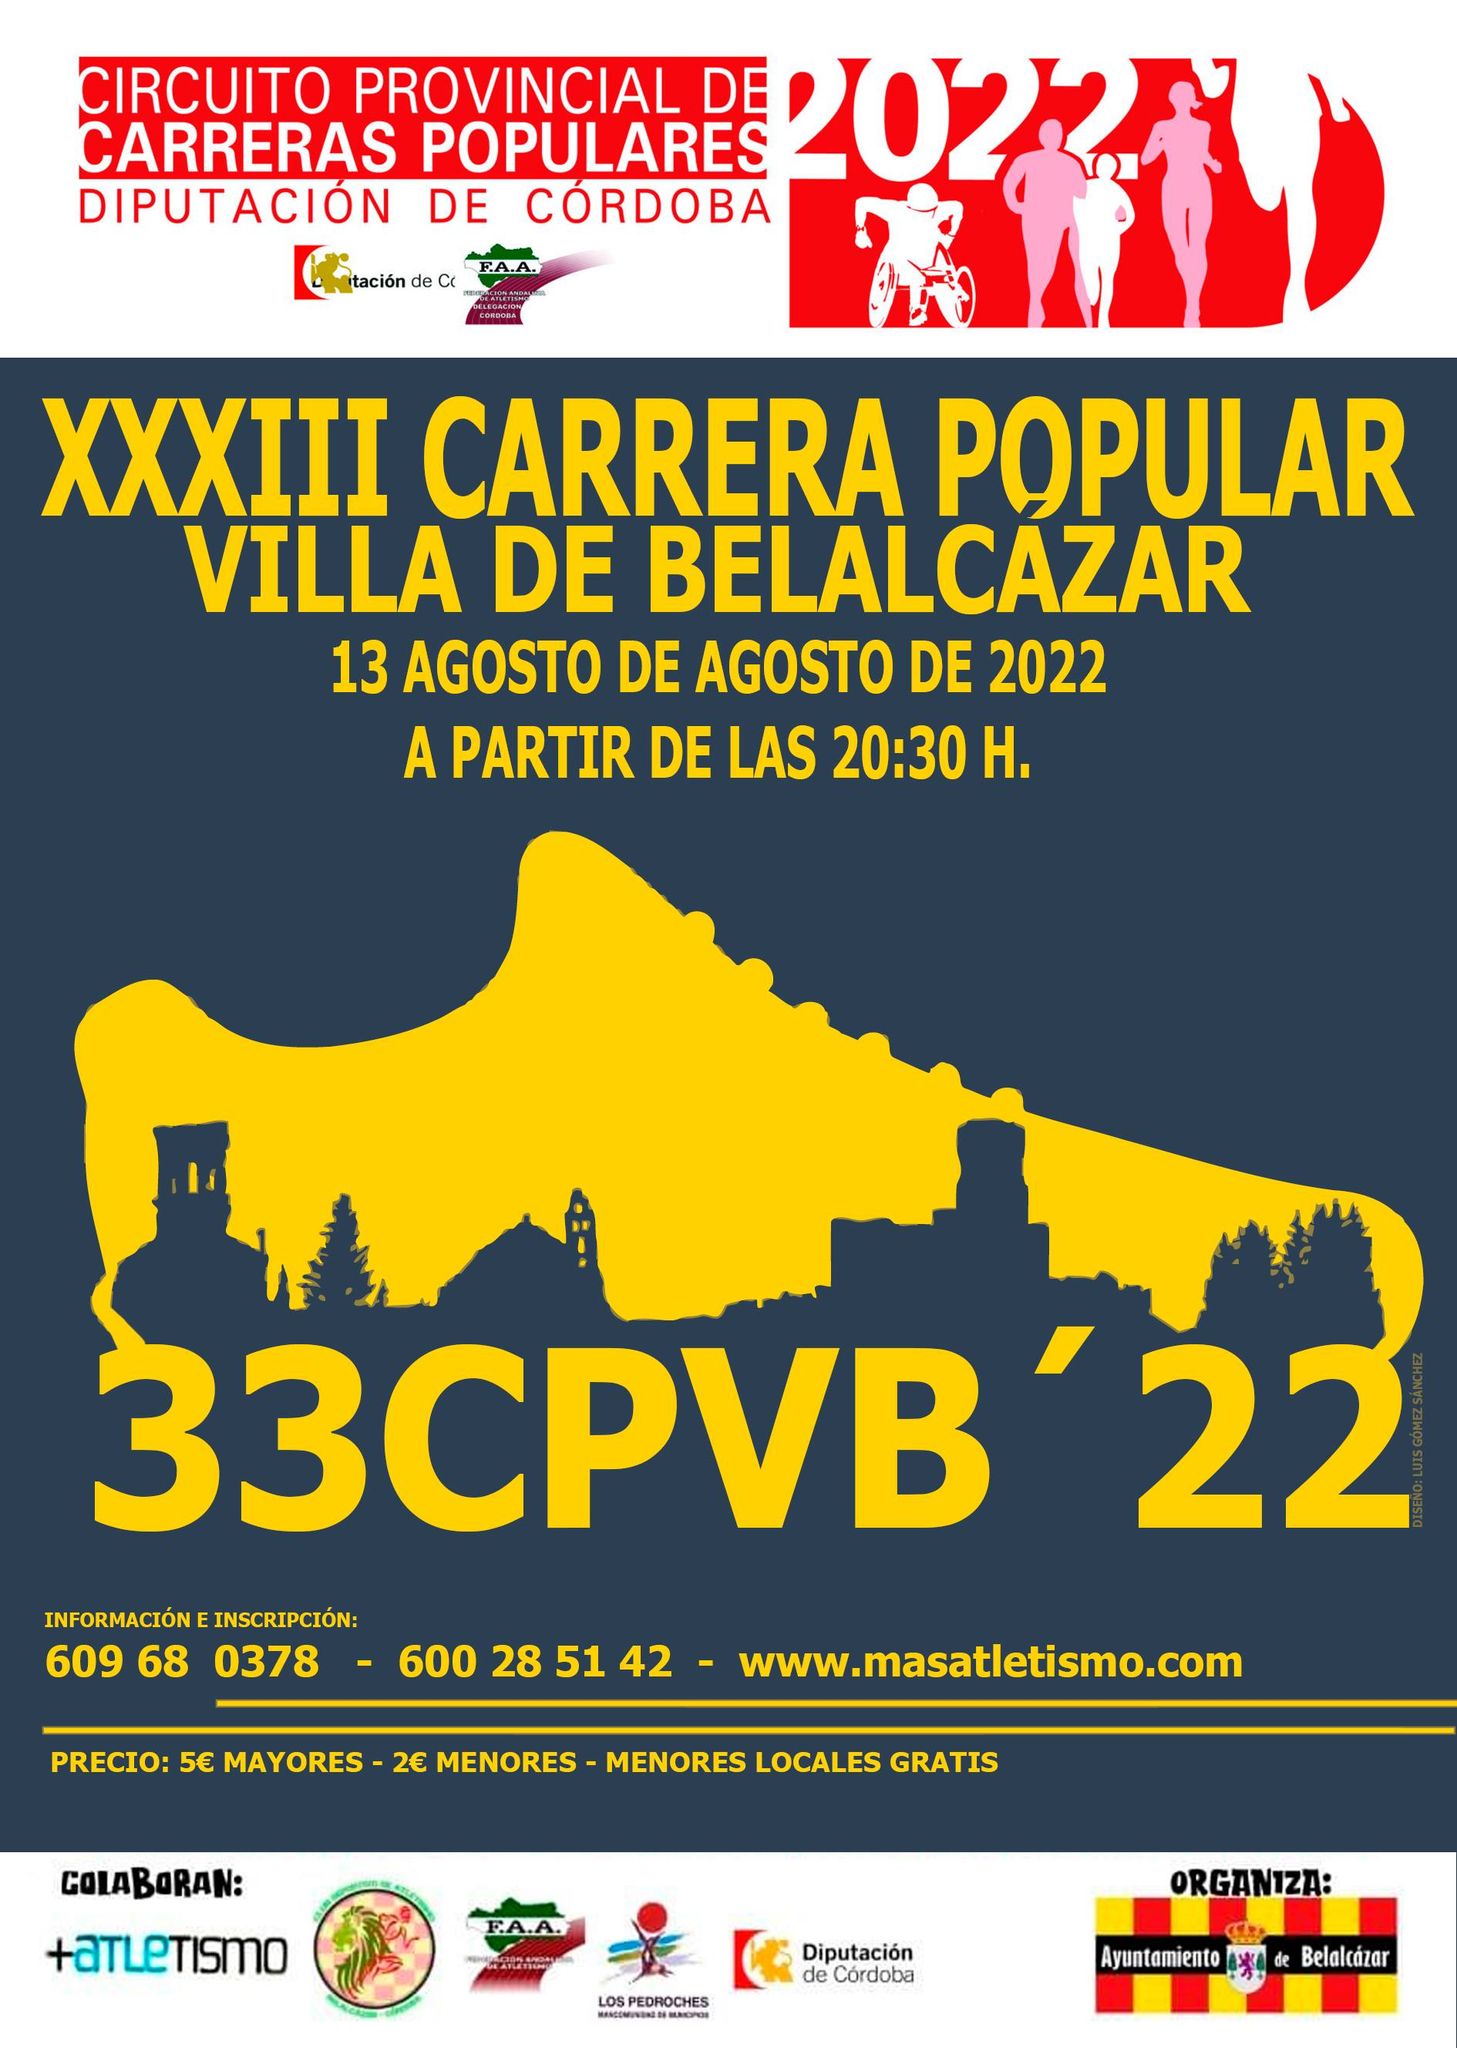 XXXIII CARRERA POPULAR VILLA DE BELALCÁZAR